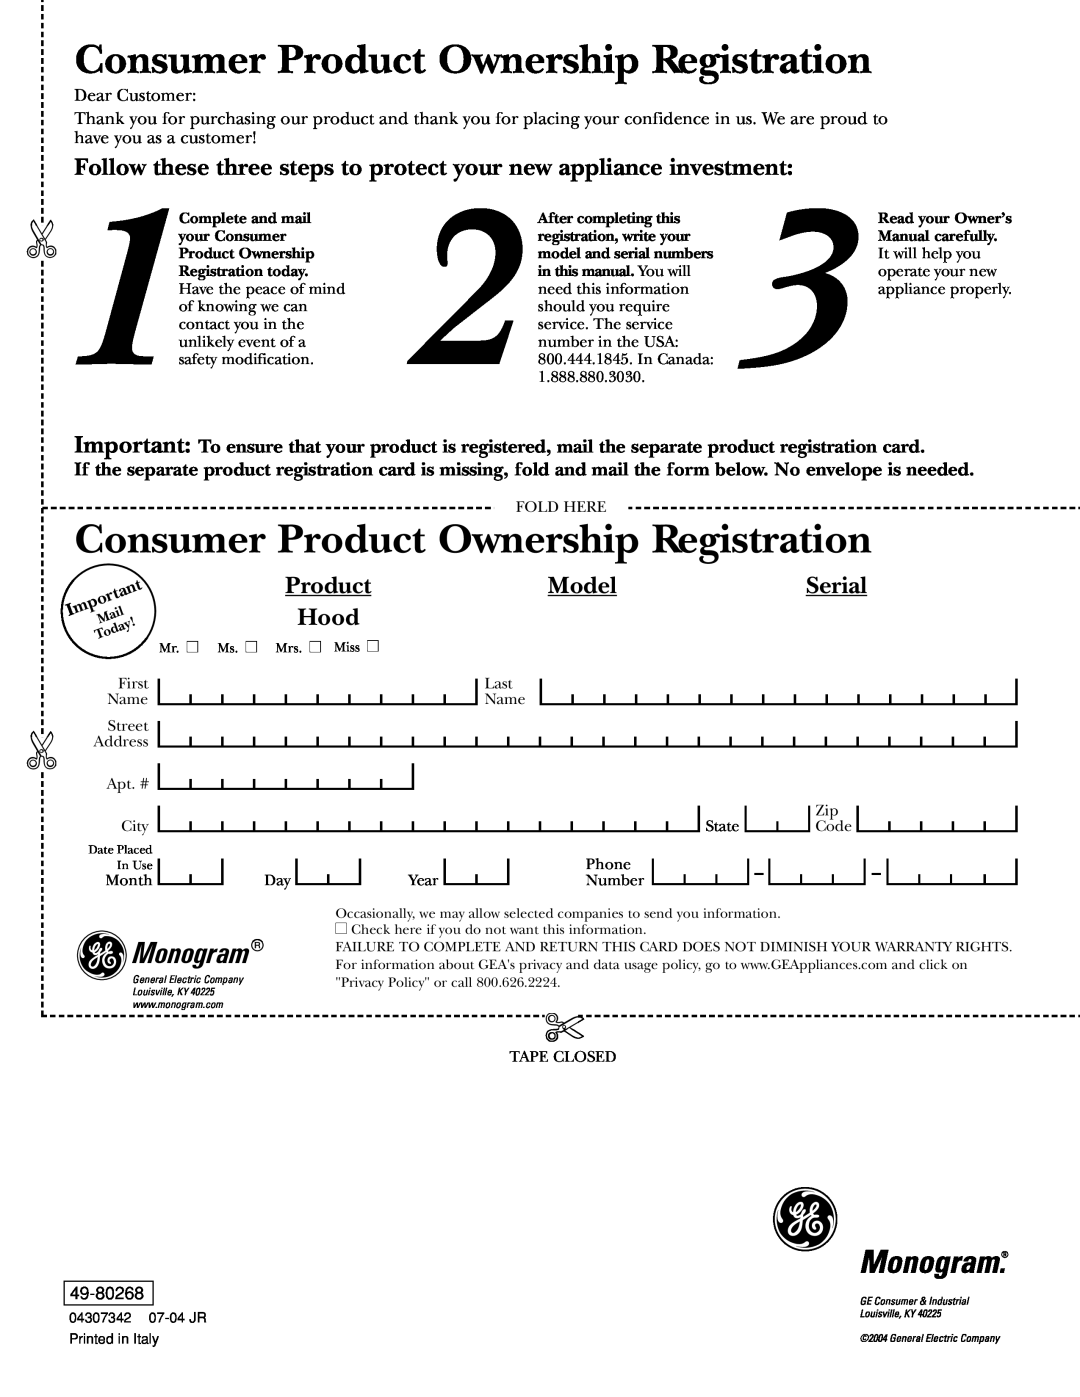 GE Monogram ZV800 owner manual Consumer Product Ownership Registration, Model, Hood, Monogram, Serial 